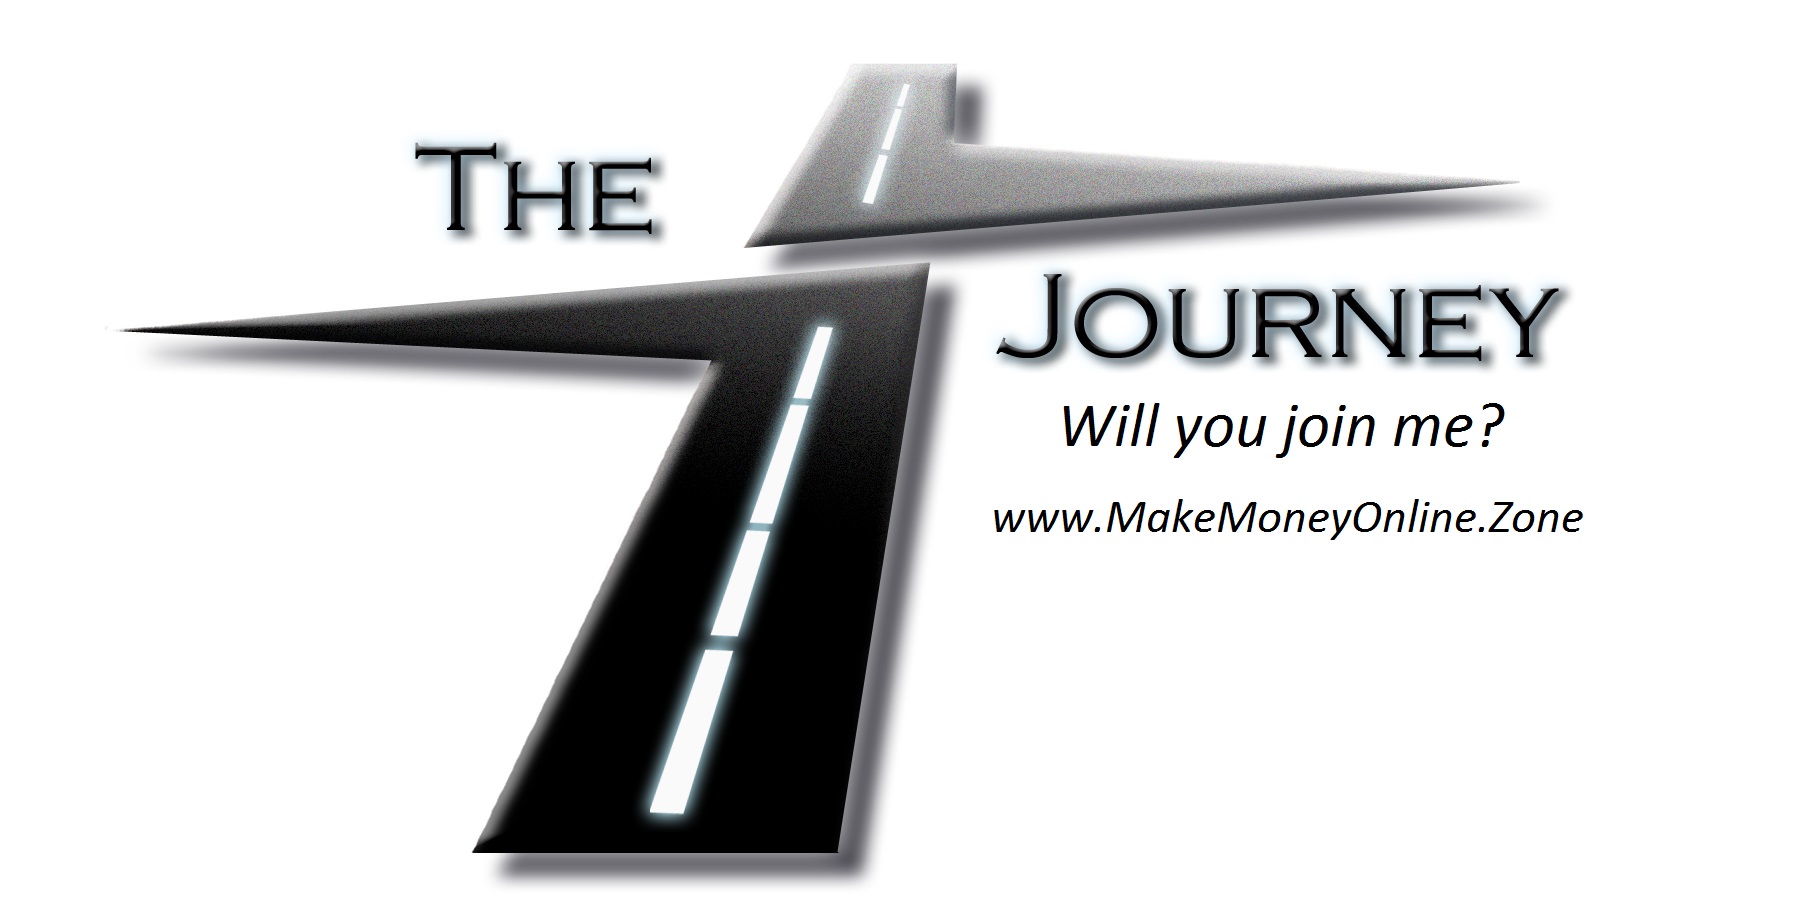 The Make Money Online Journey